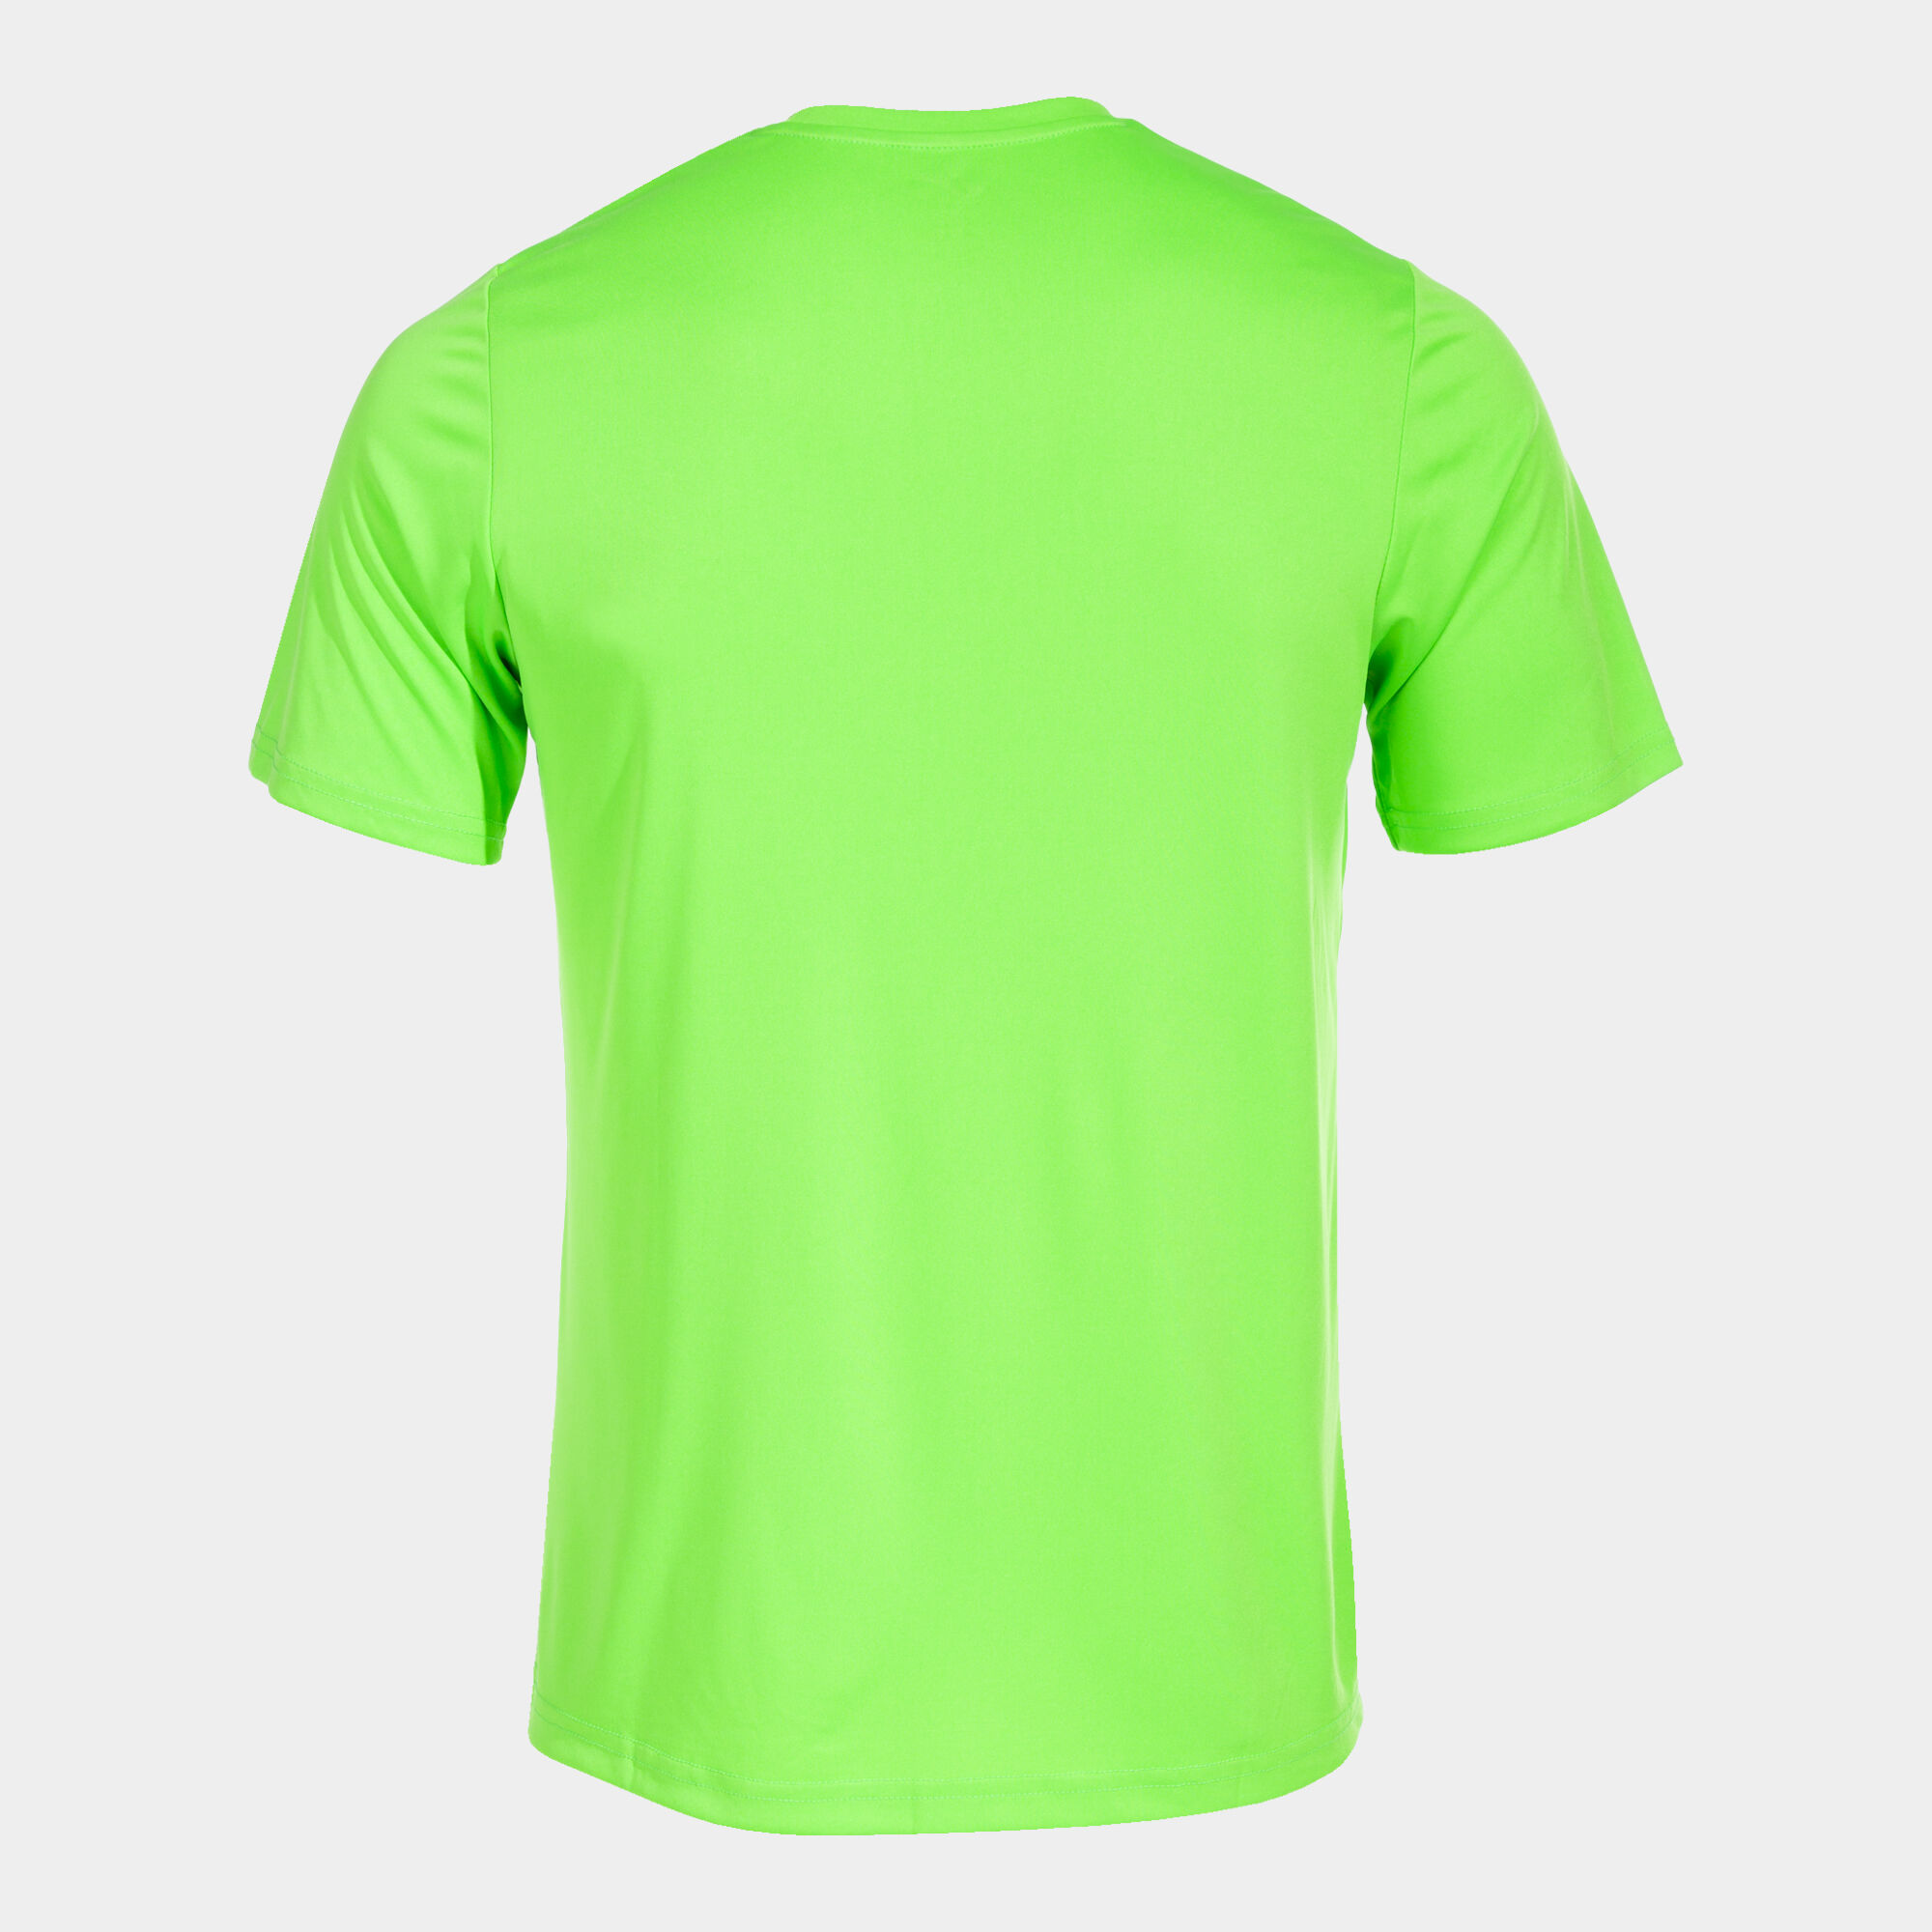 Camiseta manga corta hombre Combi verde flúor